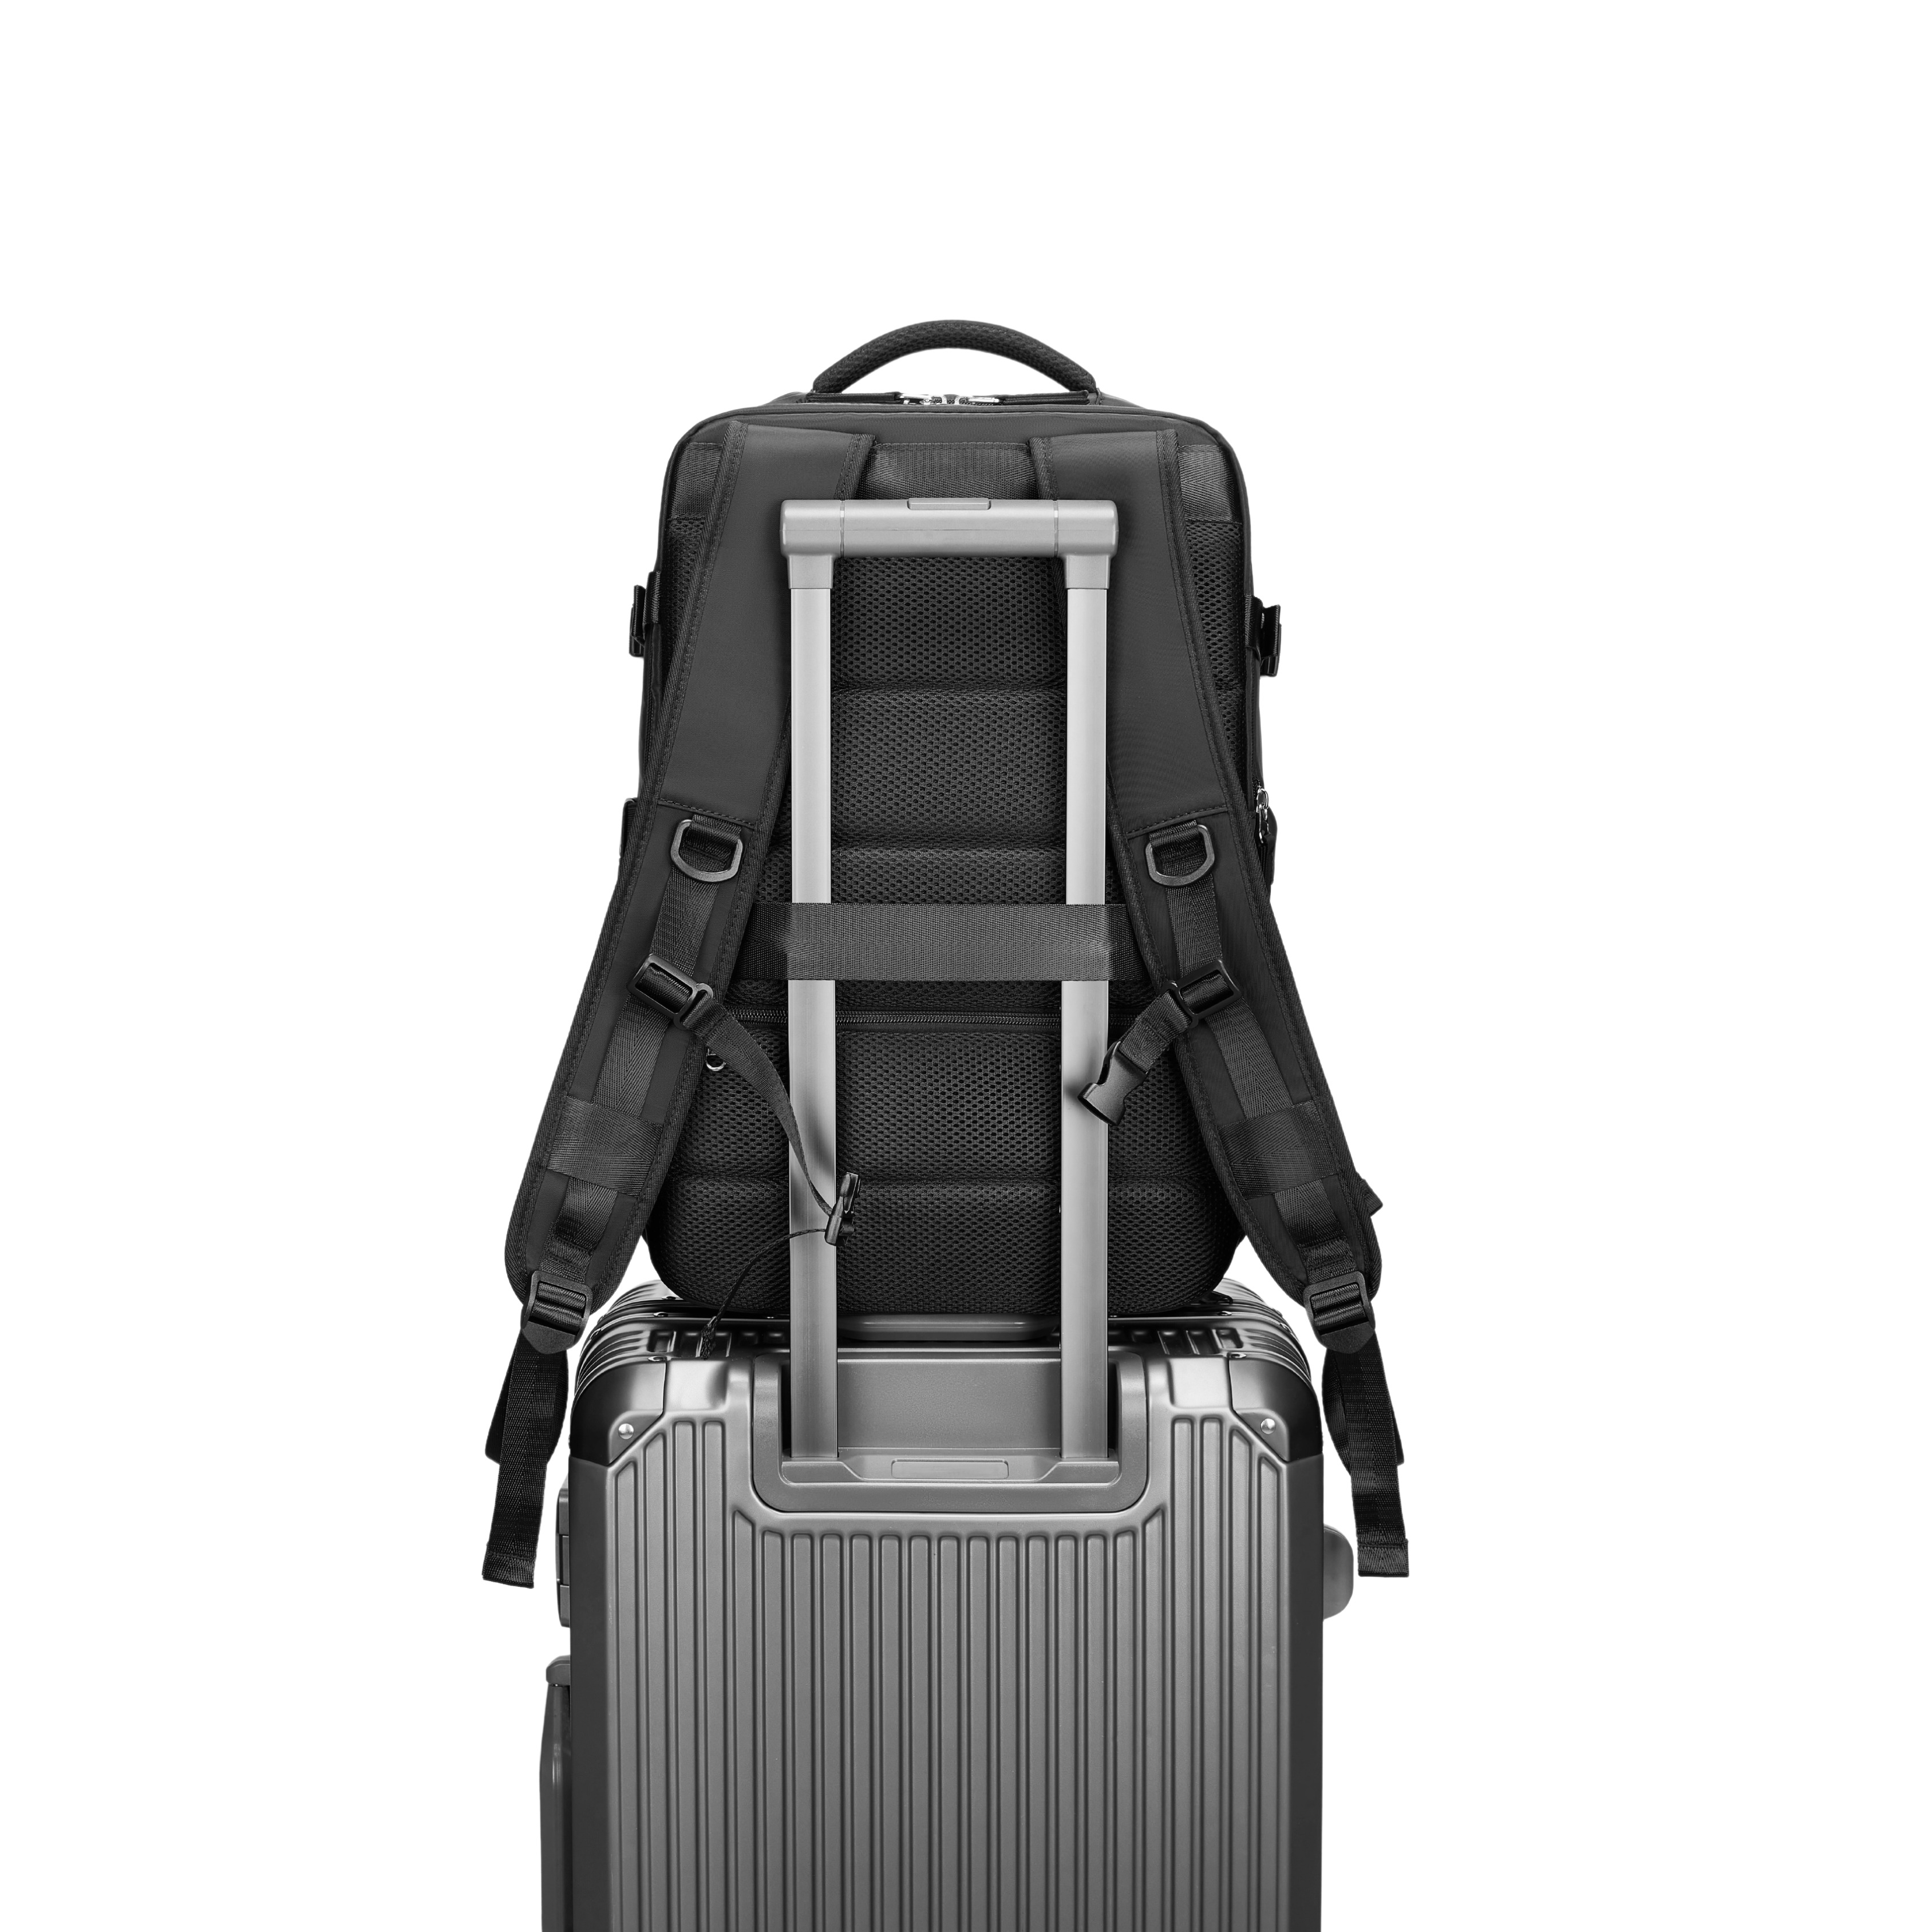 Mochila Xclusive Royal Backpack Negra expandible por atrás arriba de una maleta